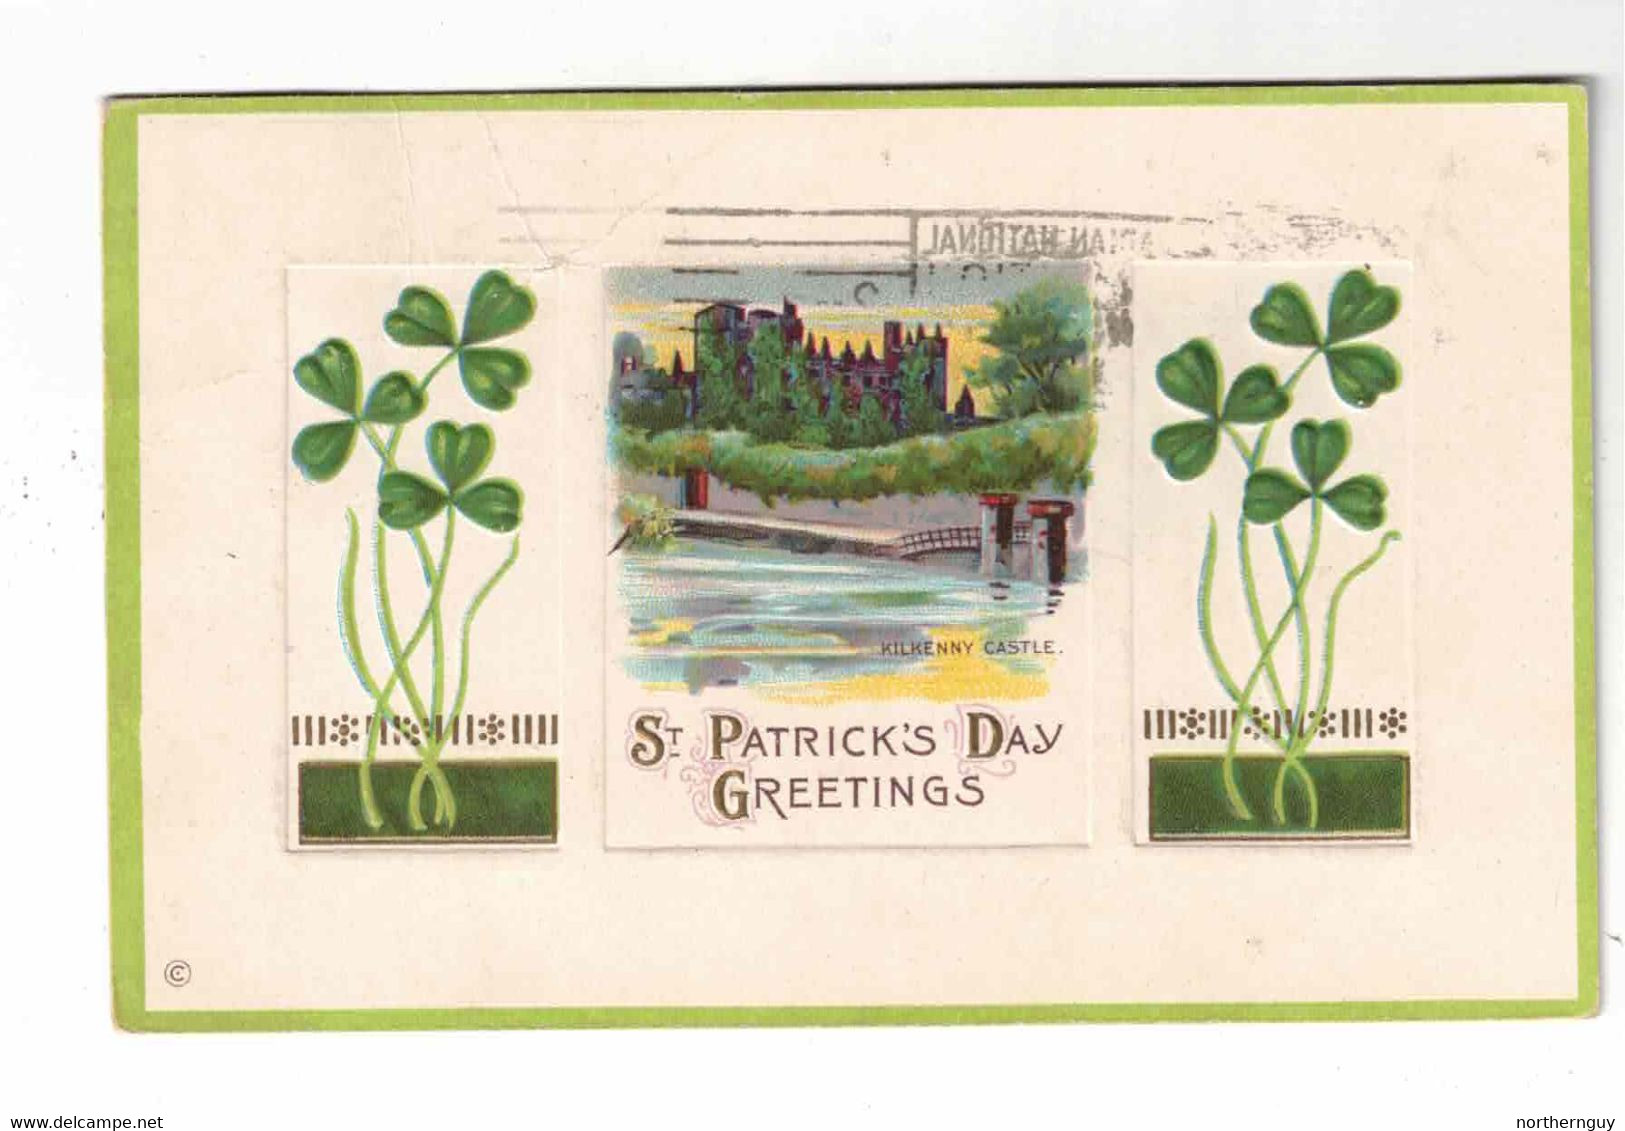 "St. Patrick's Day Greetings. Kilkenny Castle", 1915 Postcard, Canada - Saint-Patrick's Day